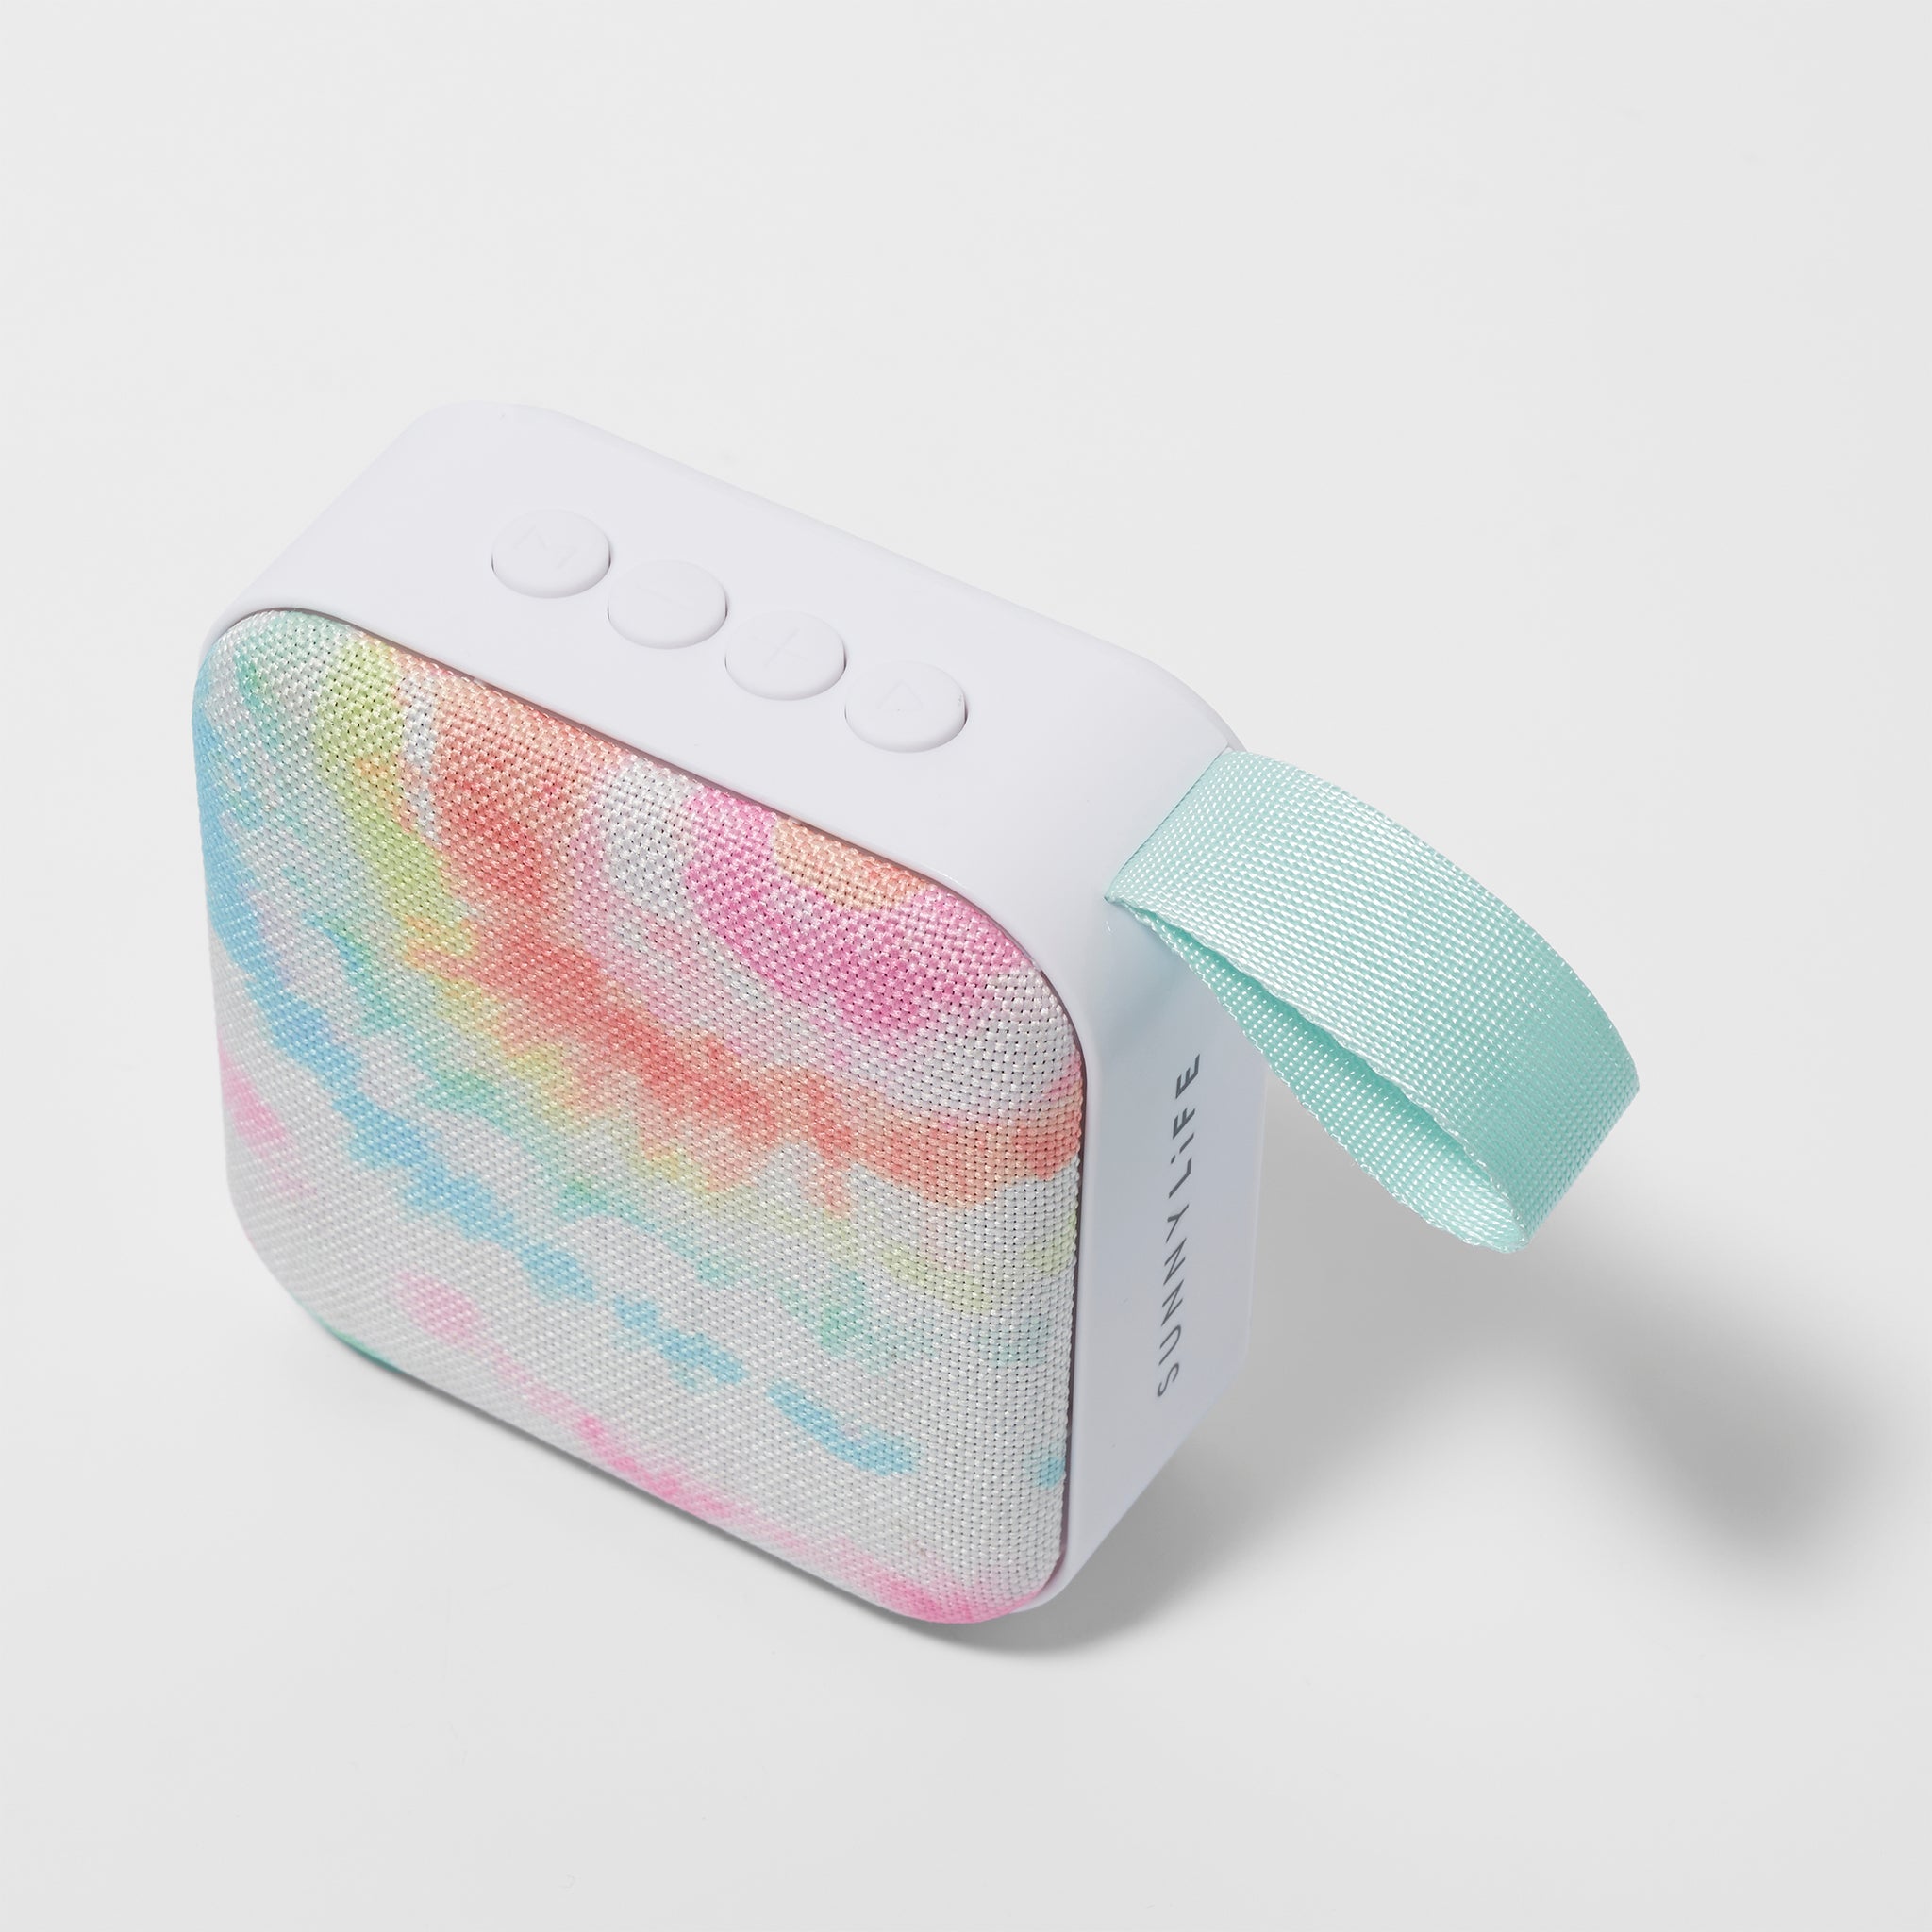 Portable Travel Speaker | Tie Dye Multi